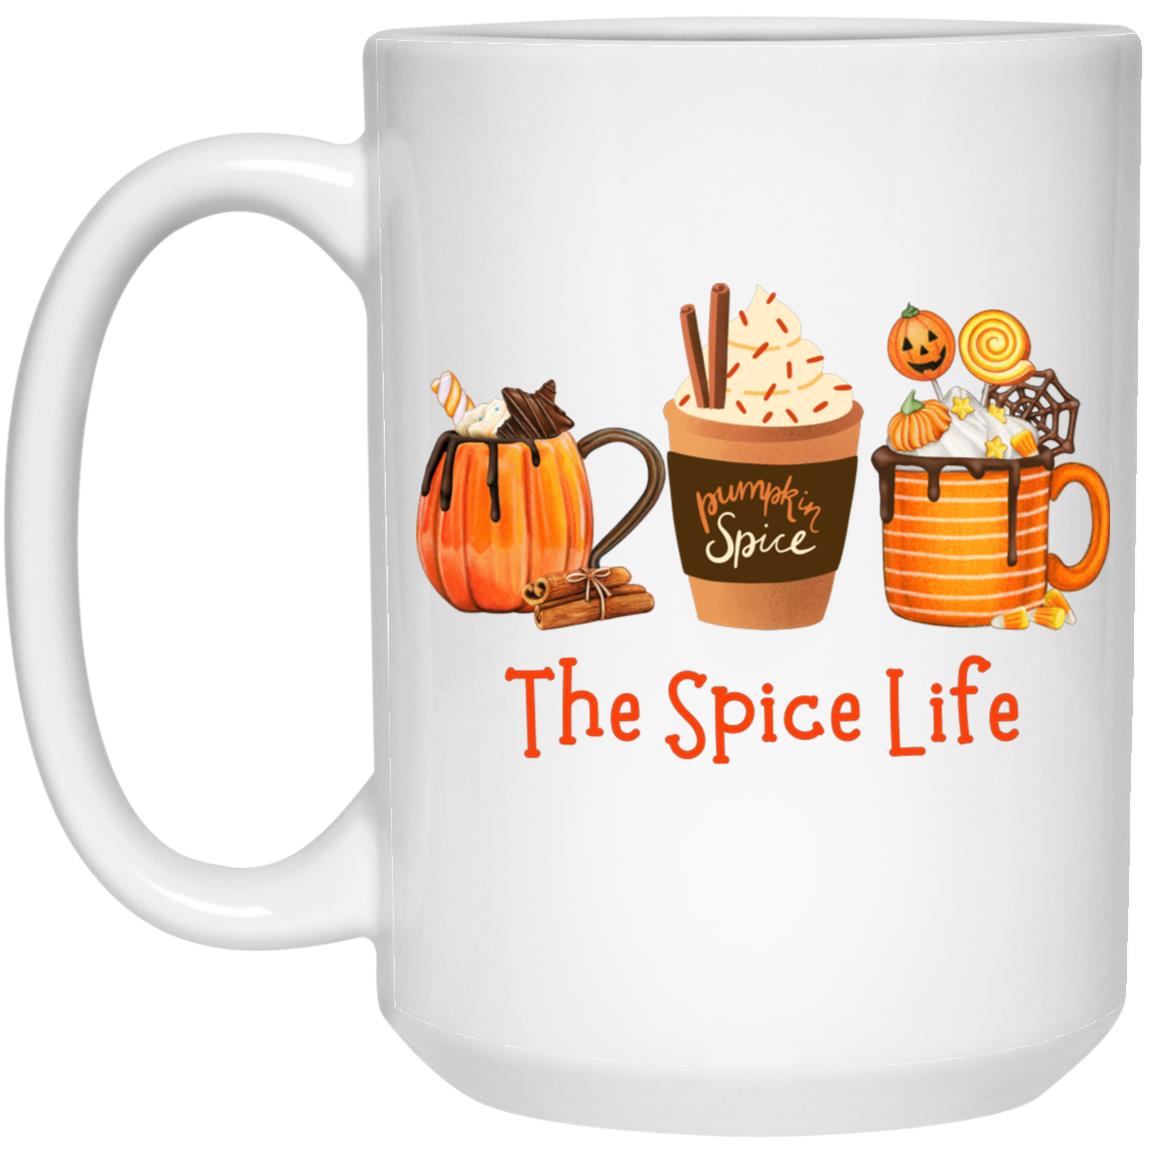 The Spice Life Mug